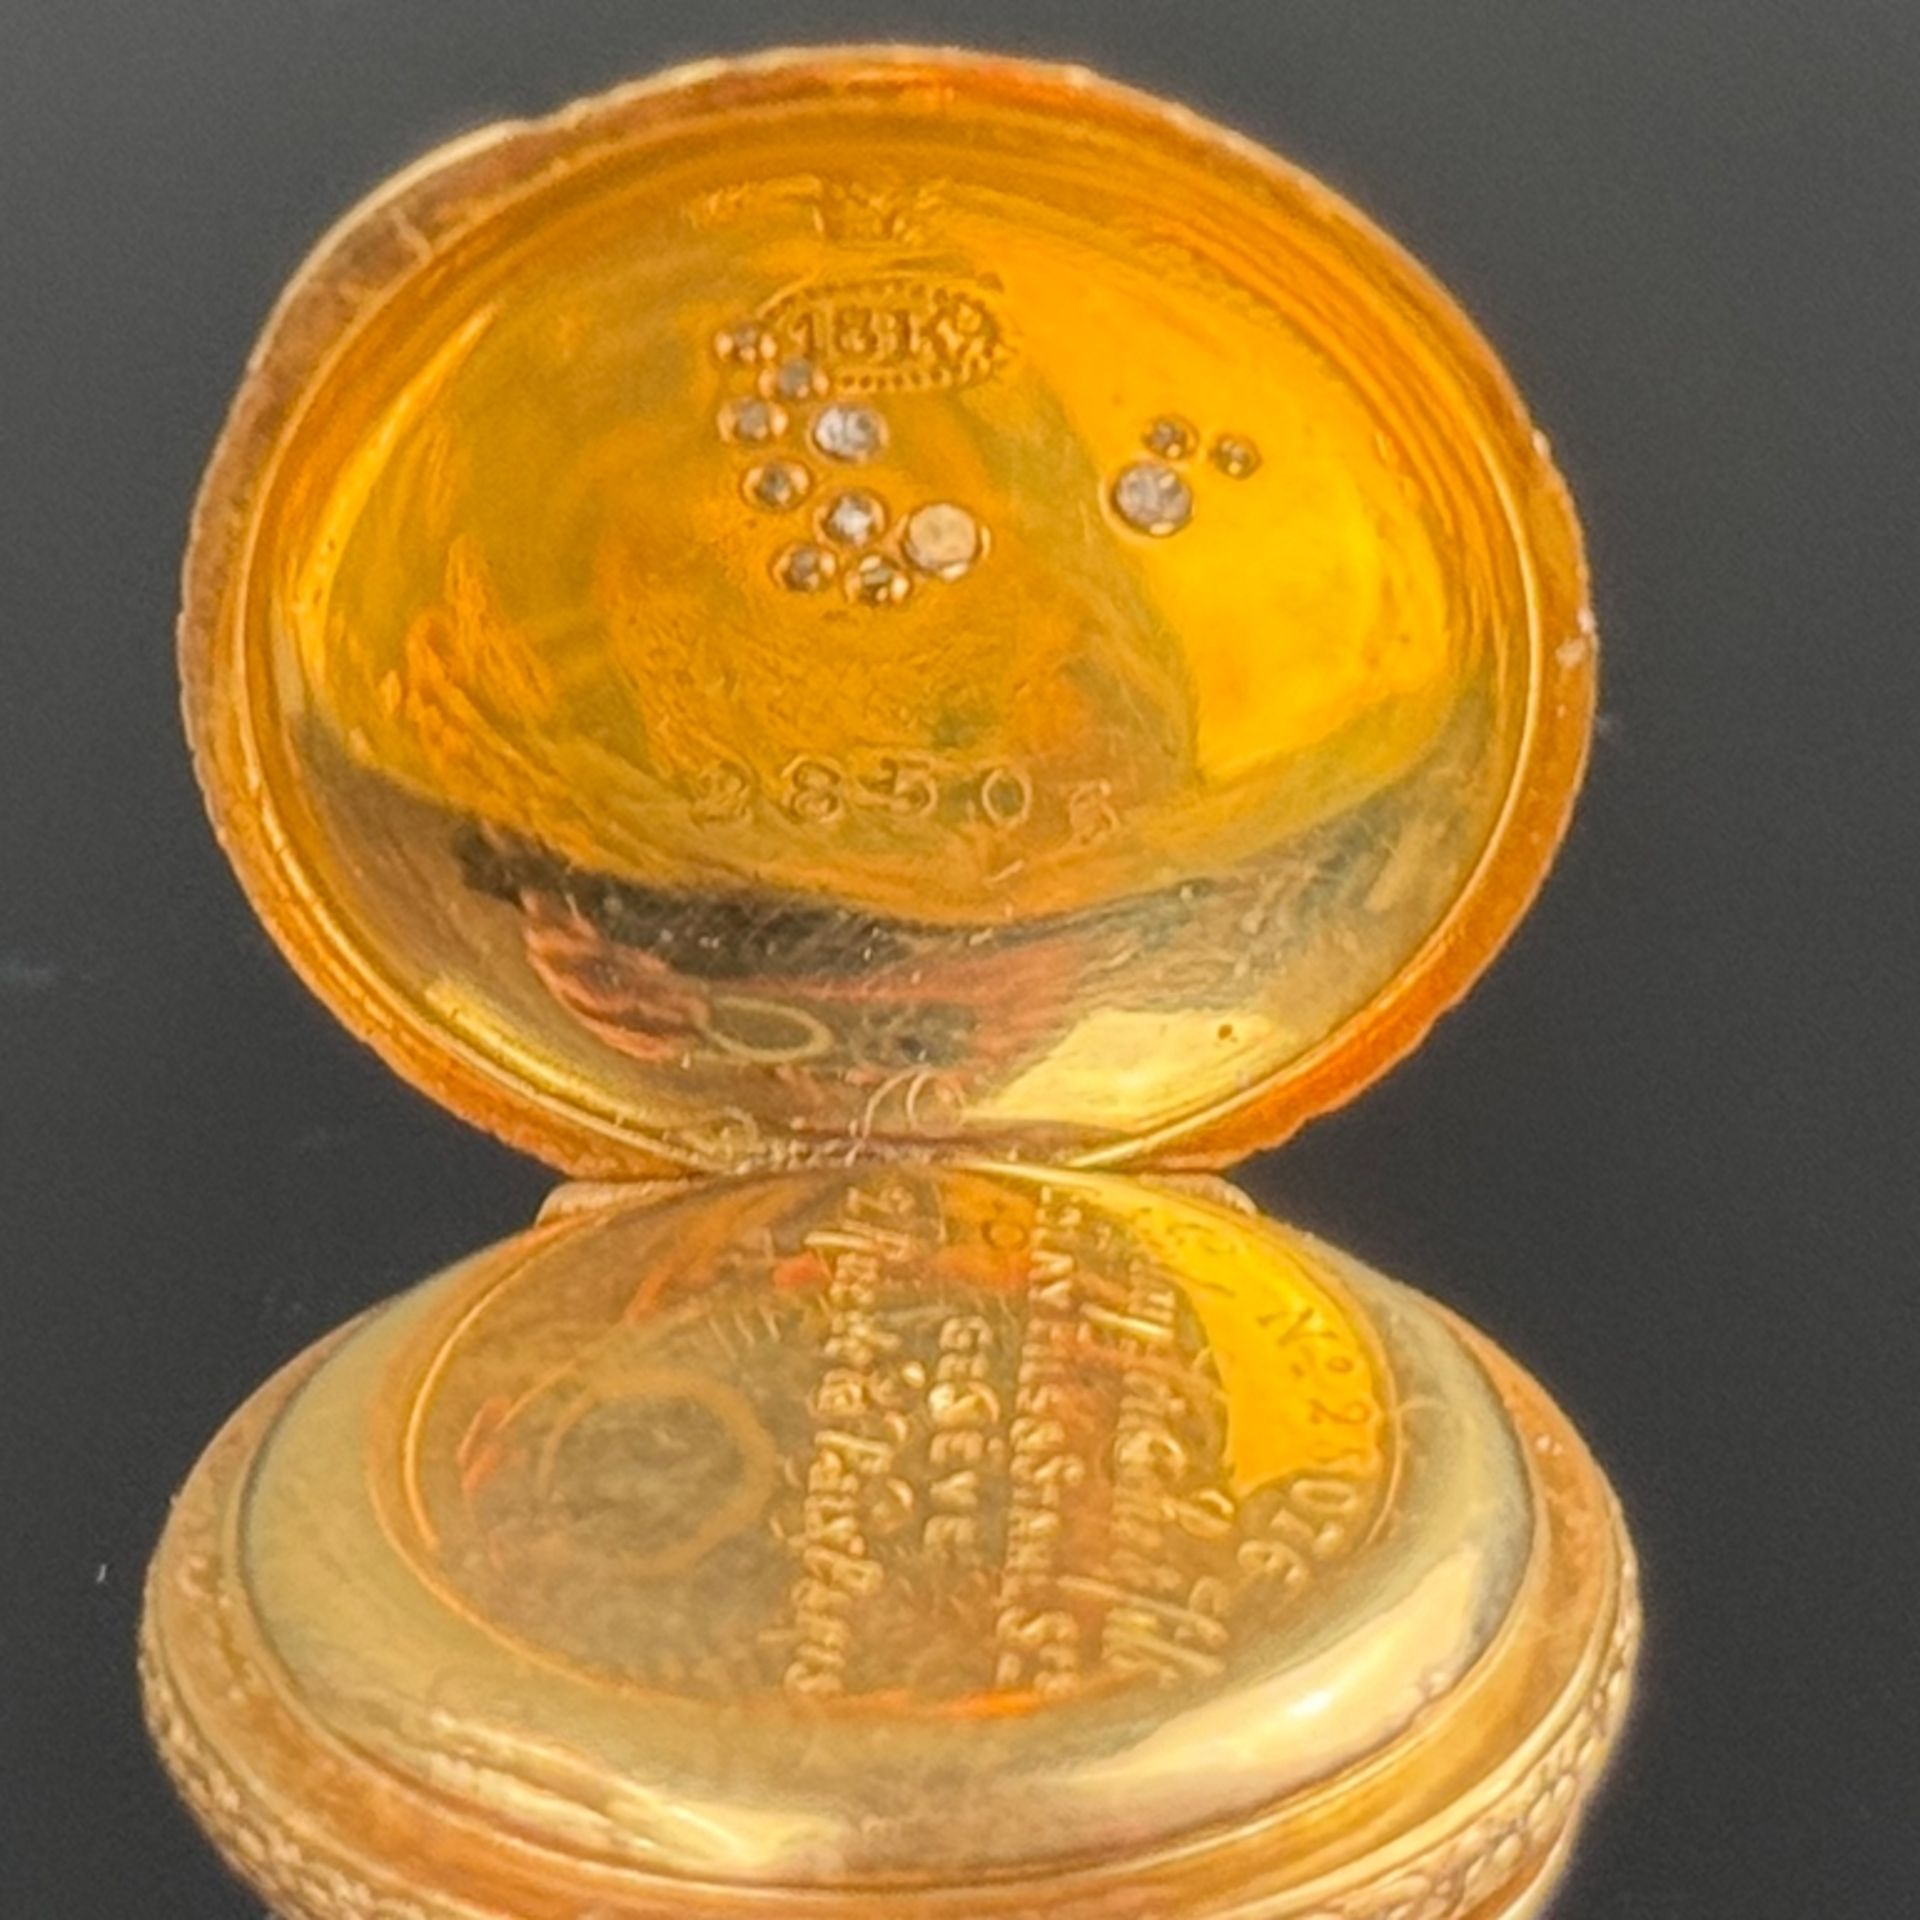 Fine pocket watch with dragon motif, Golay Leresche & Fils, Geneva, circa 1900, 750/18K yellow gold - Image 4 of 4